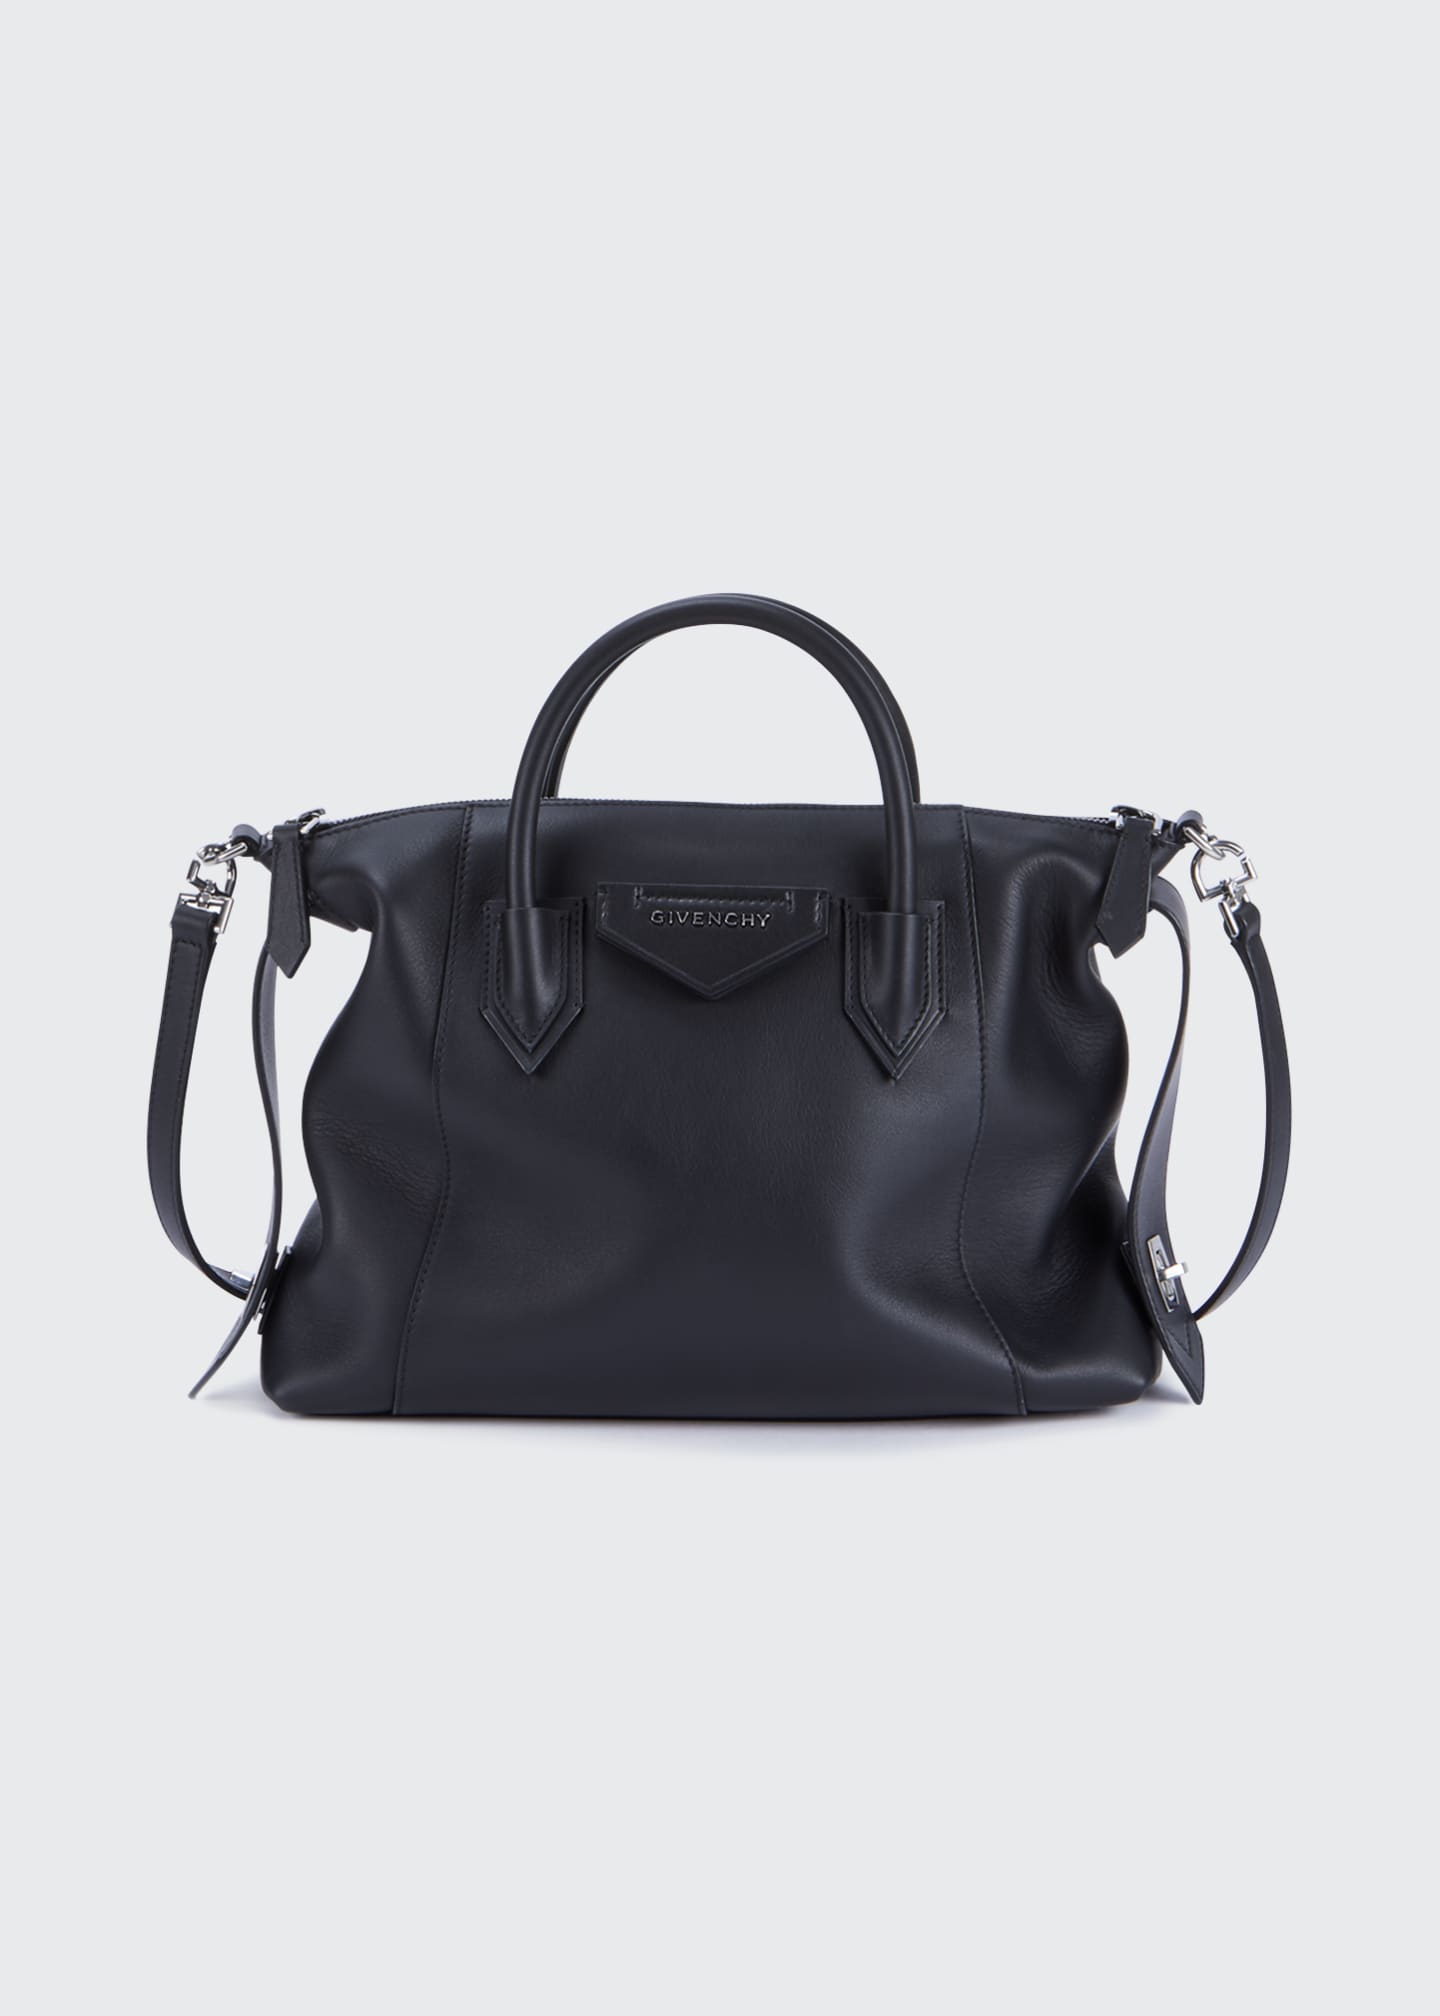 Givenchy Antigona Soft Small Leather Bag - Bergdorf Goodman